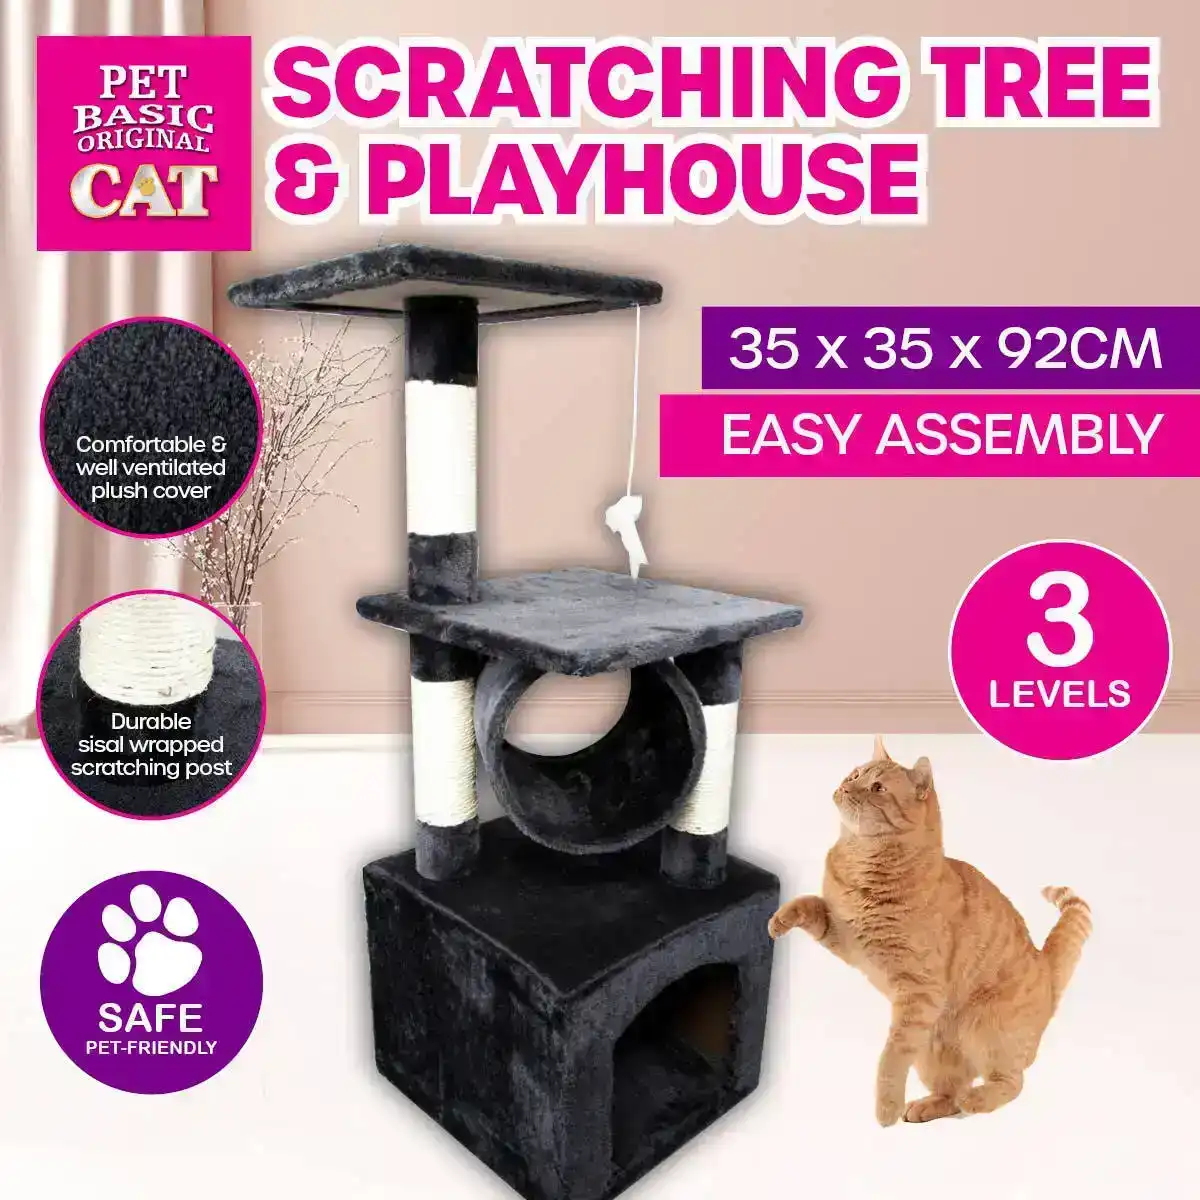 Pet Basic® 3 Level Cat Scratch Tree & Playhouse Fun Climb Rest 92 x 35cm